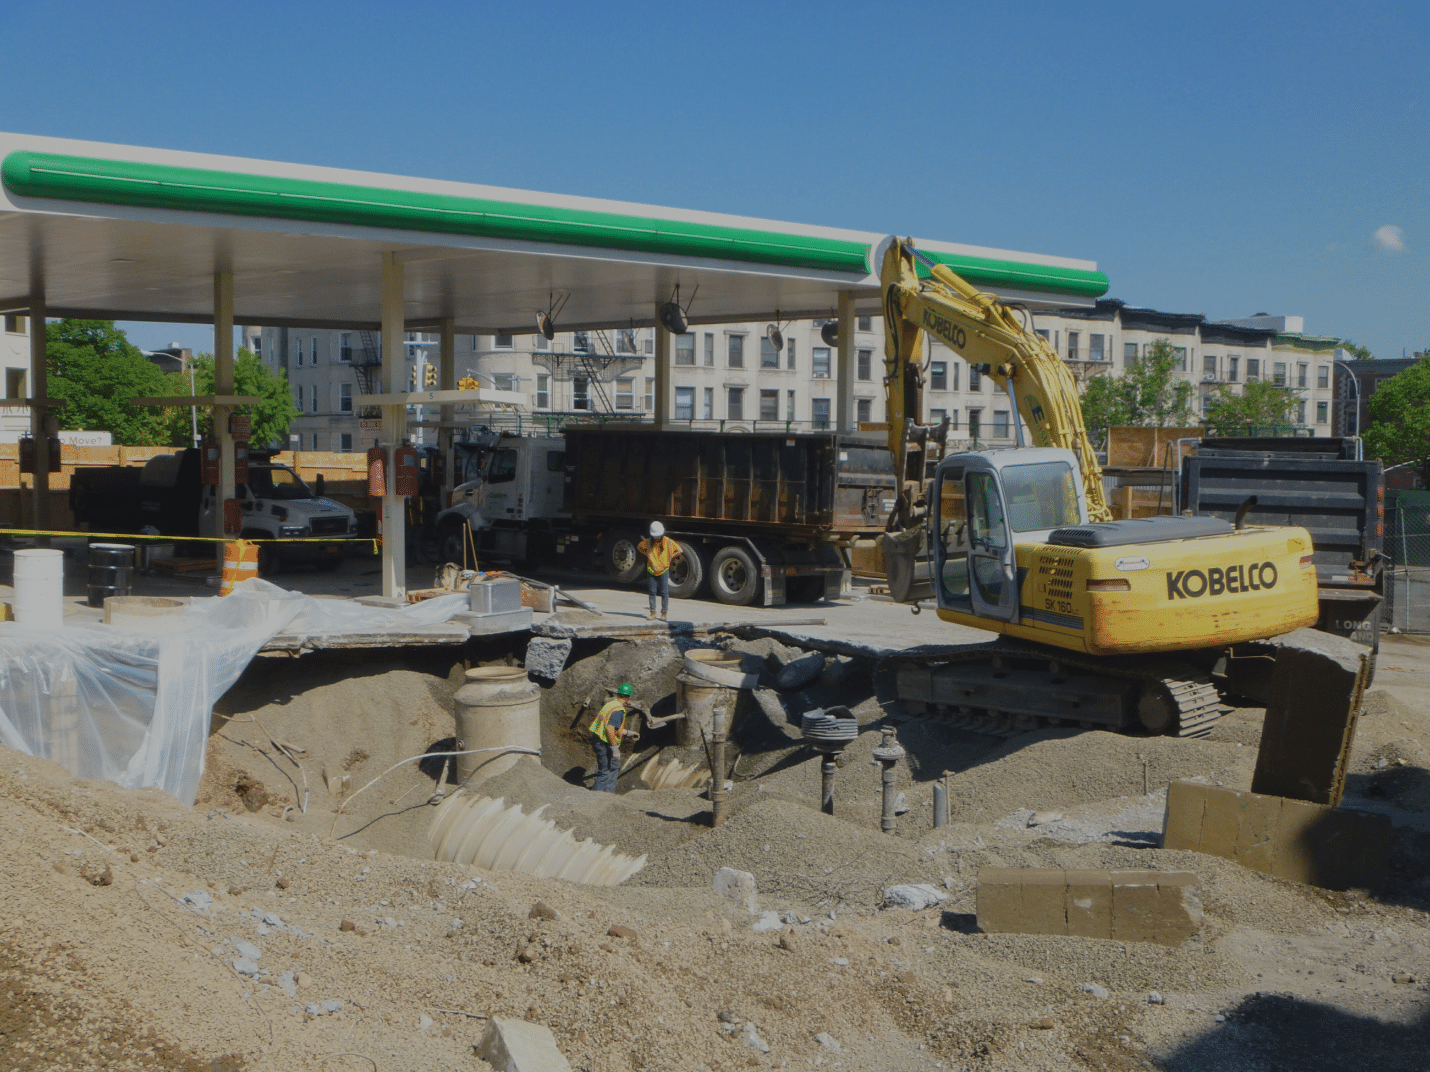 Excavator removing an undergound storage tank at a gas station 